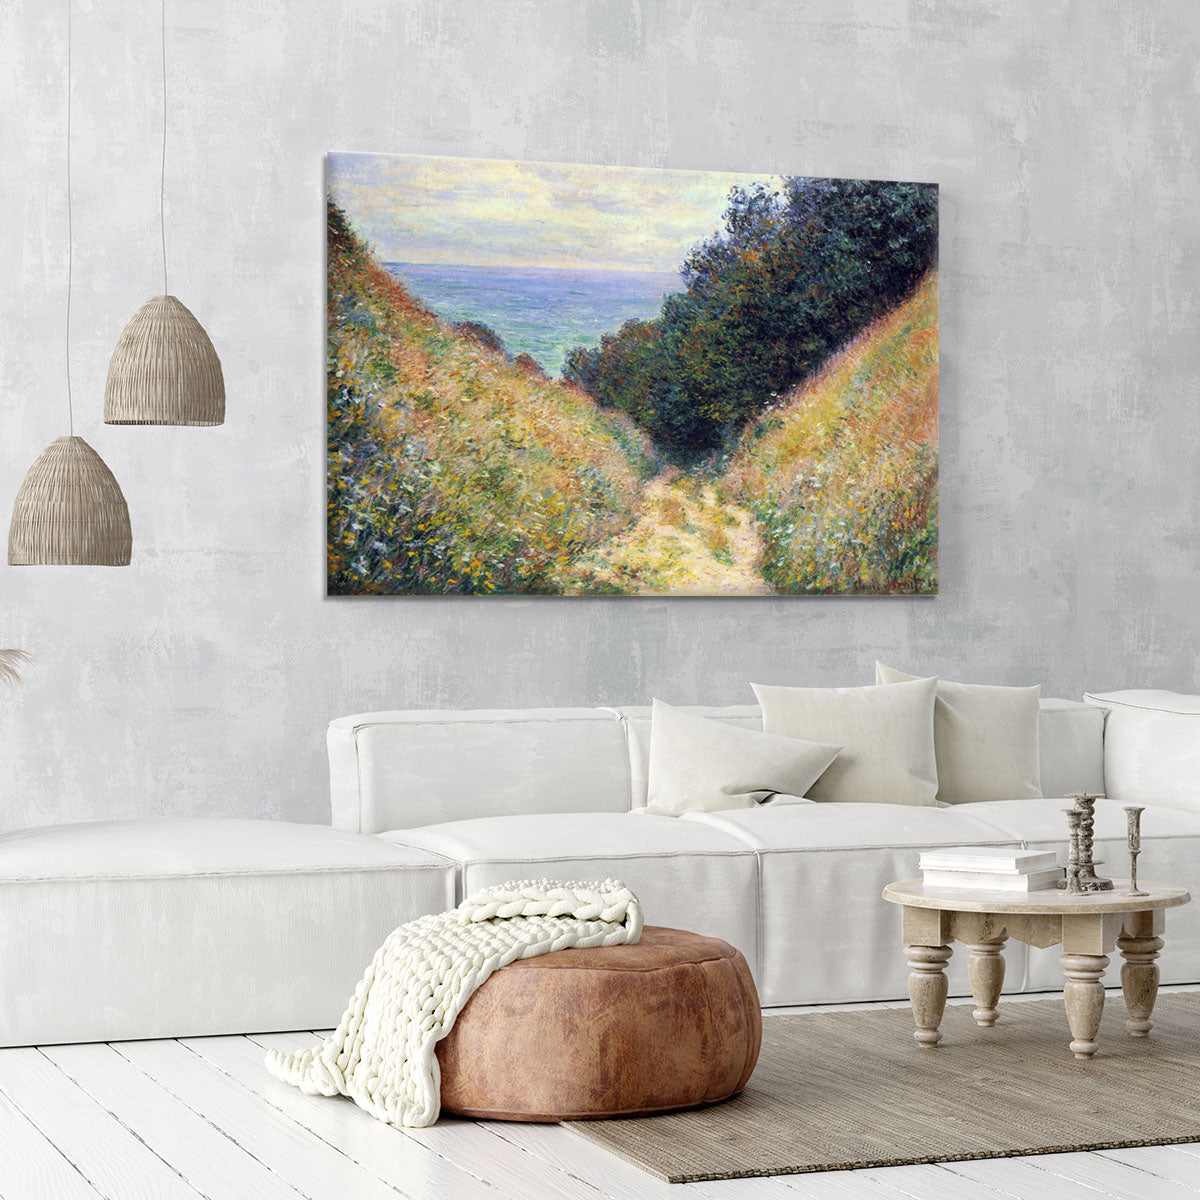 Pourville 1 by Monet Canvas Print or Poster - Canvas Art Rocks - 6